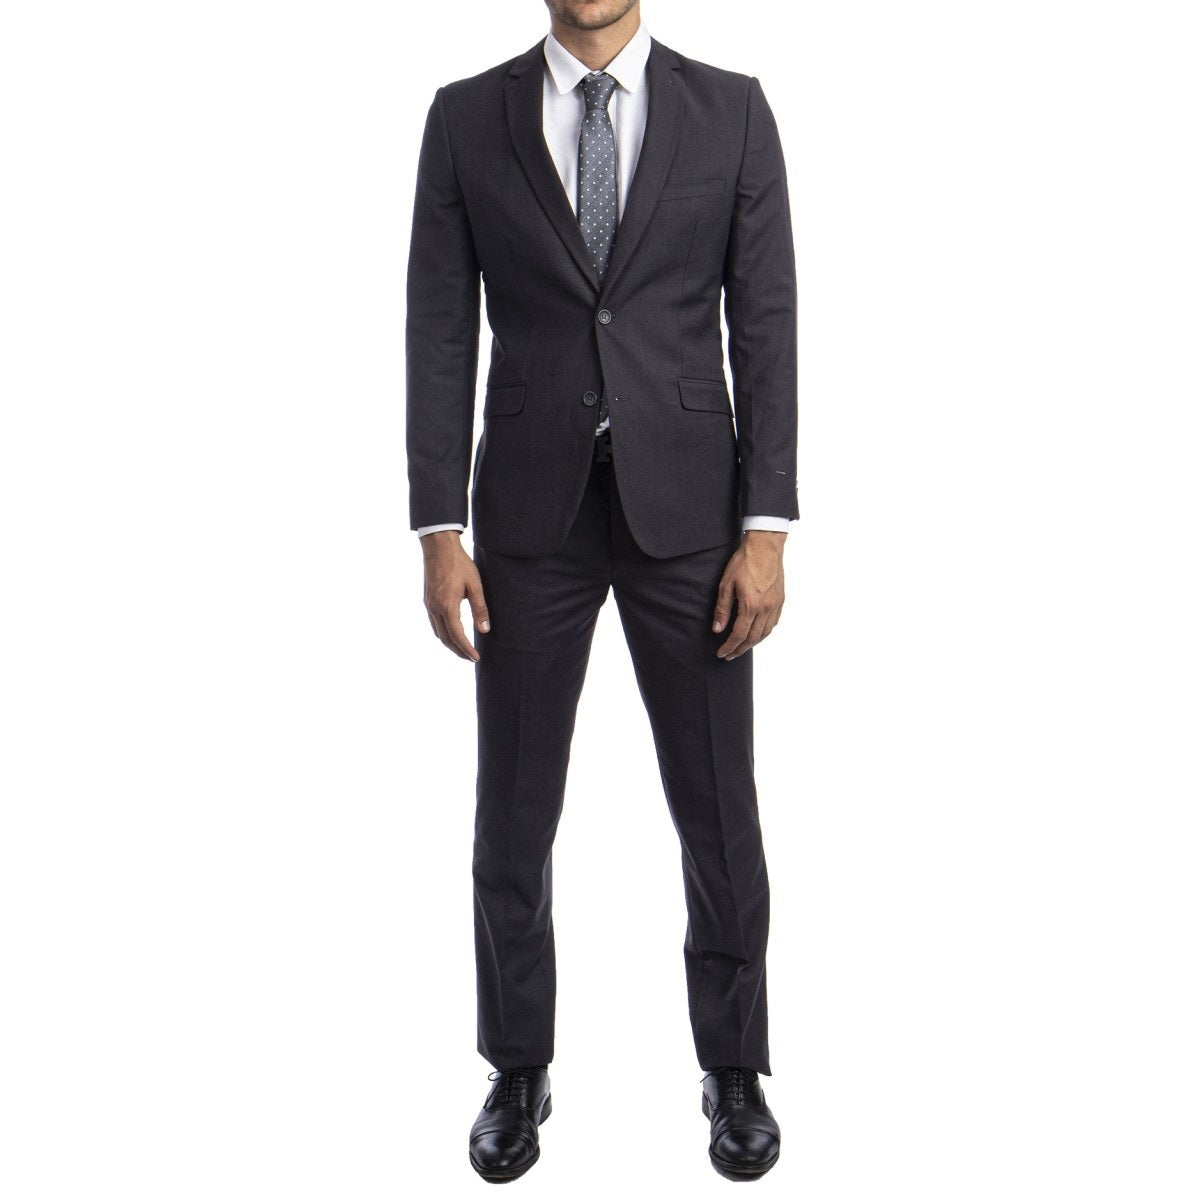 Traje Formal para Hombre TA-M276S-09 Charcoal - Formal Suit for Men